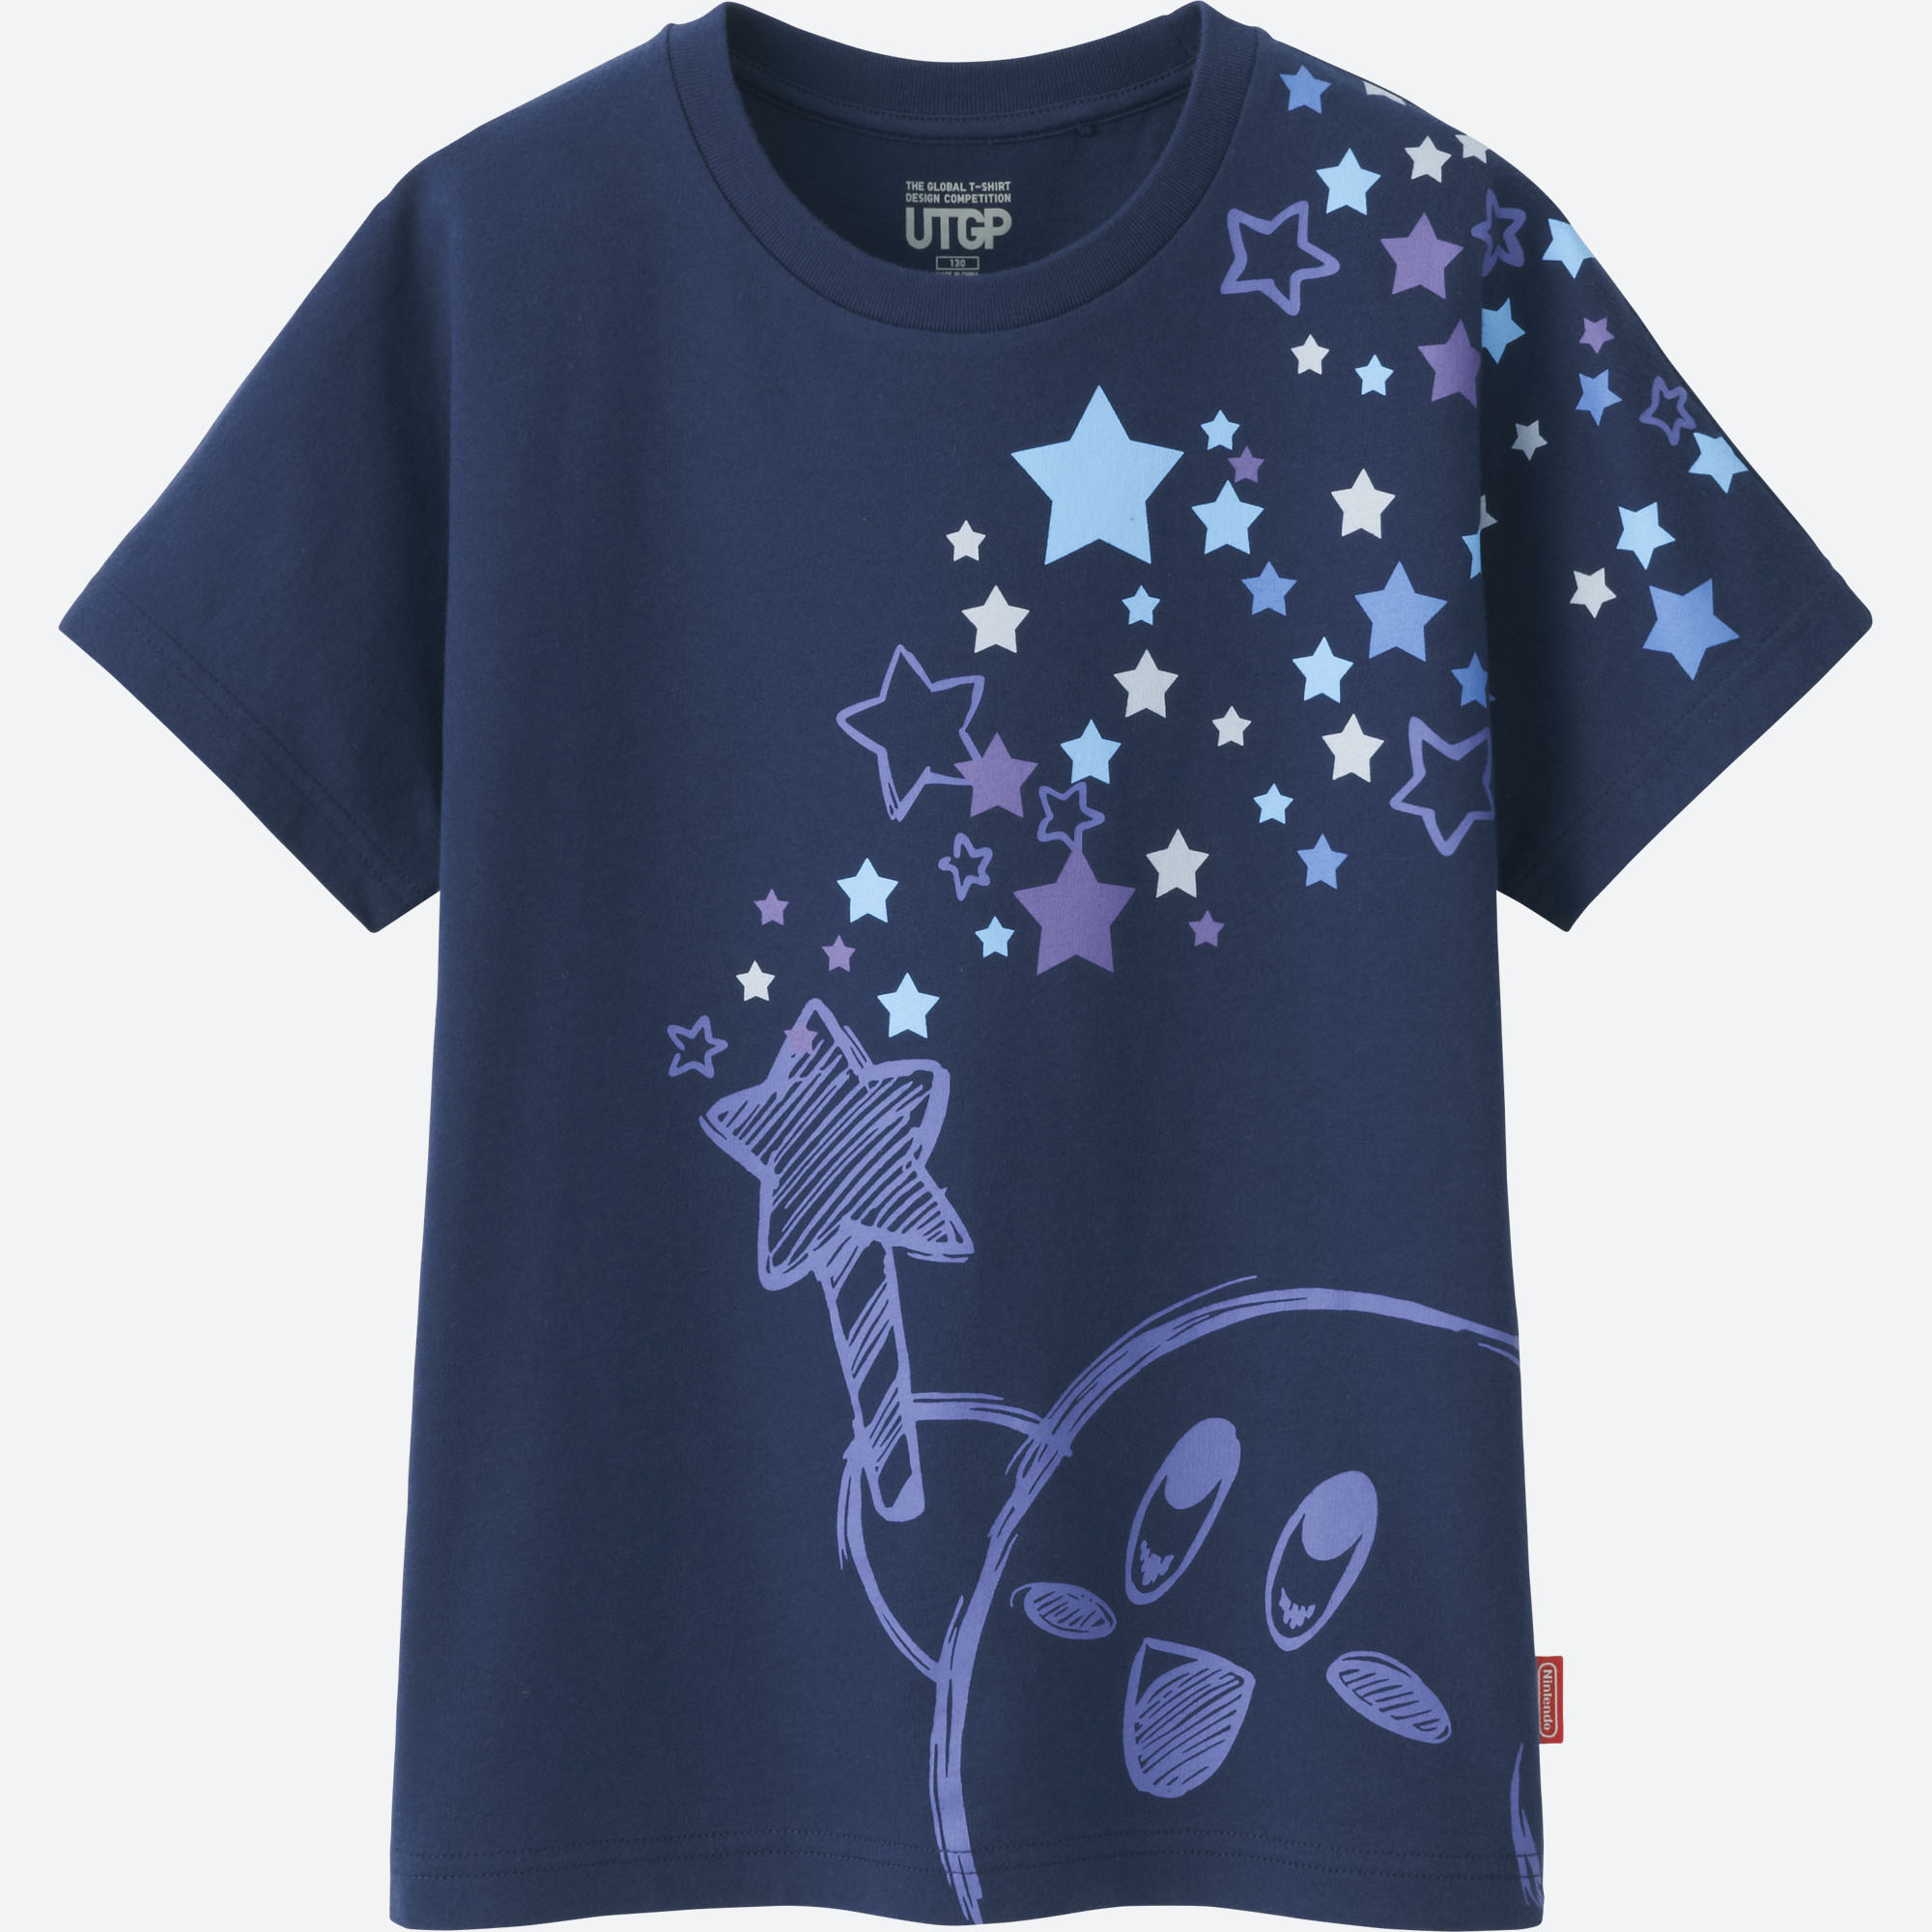 UNIQLO Got Some Real Nice Nintendo Shirts